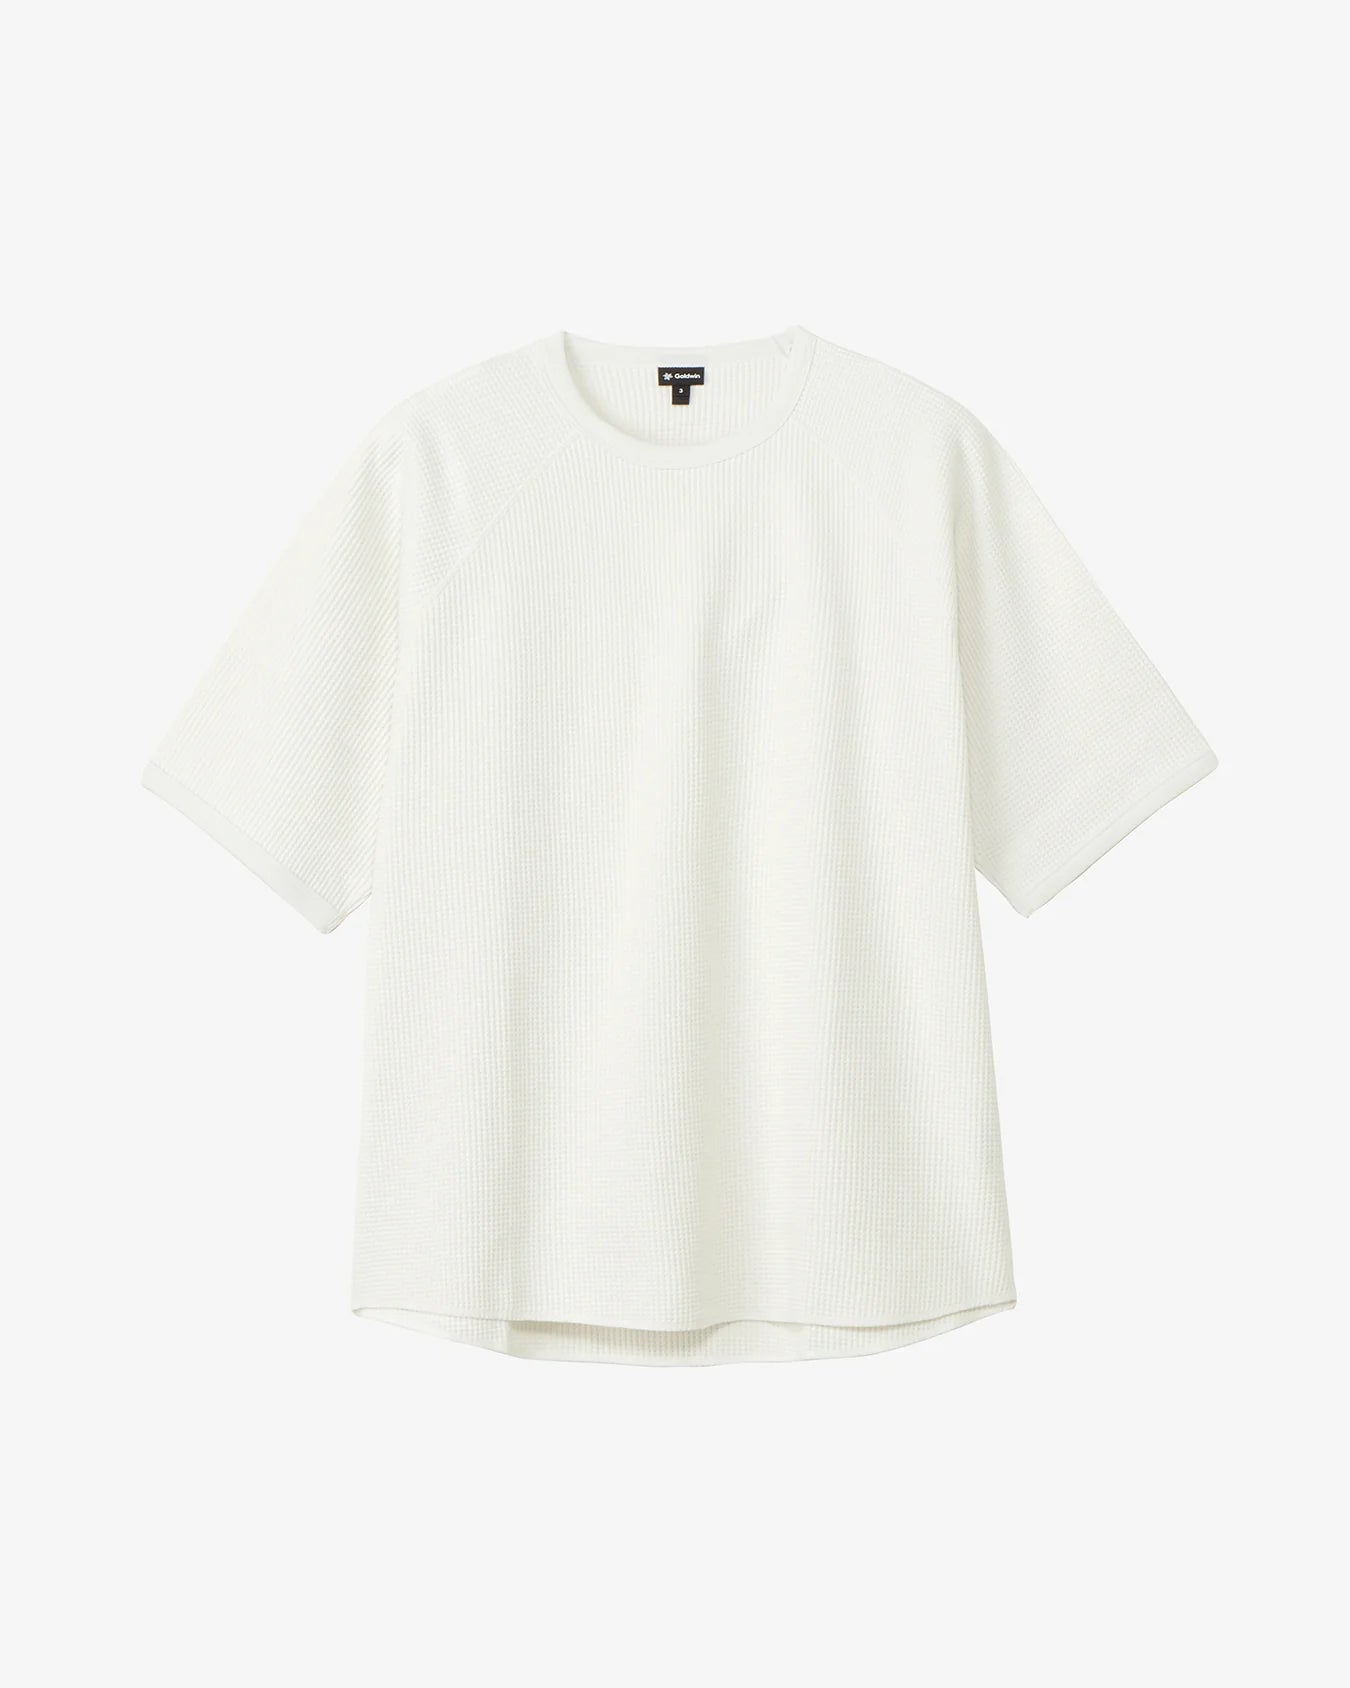 WF Light T-shirt - White